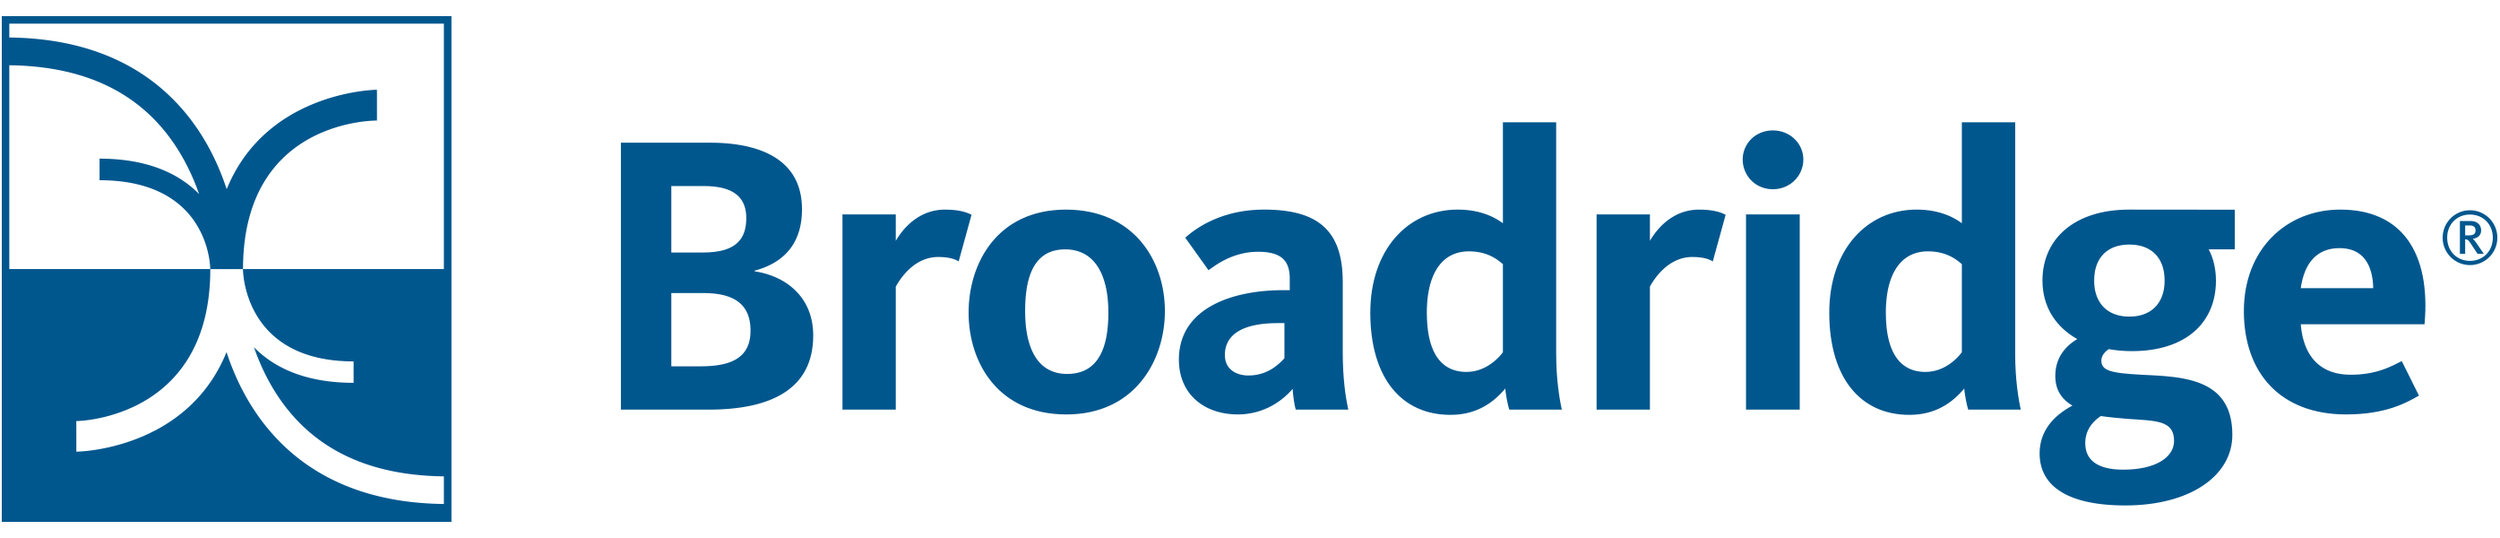 Broadridge Logo.jpg